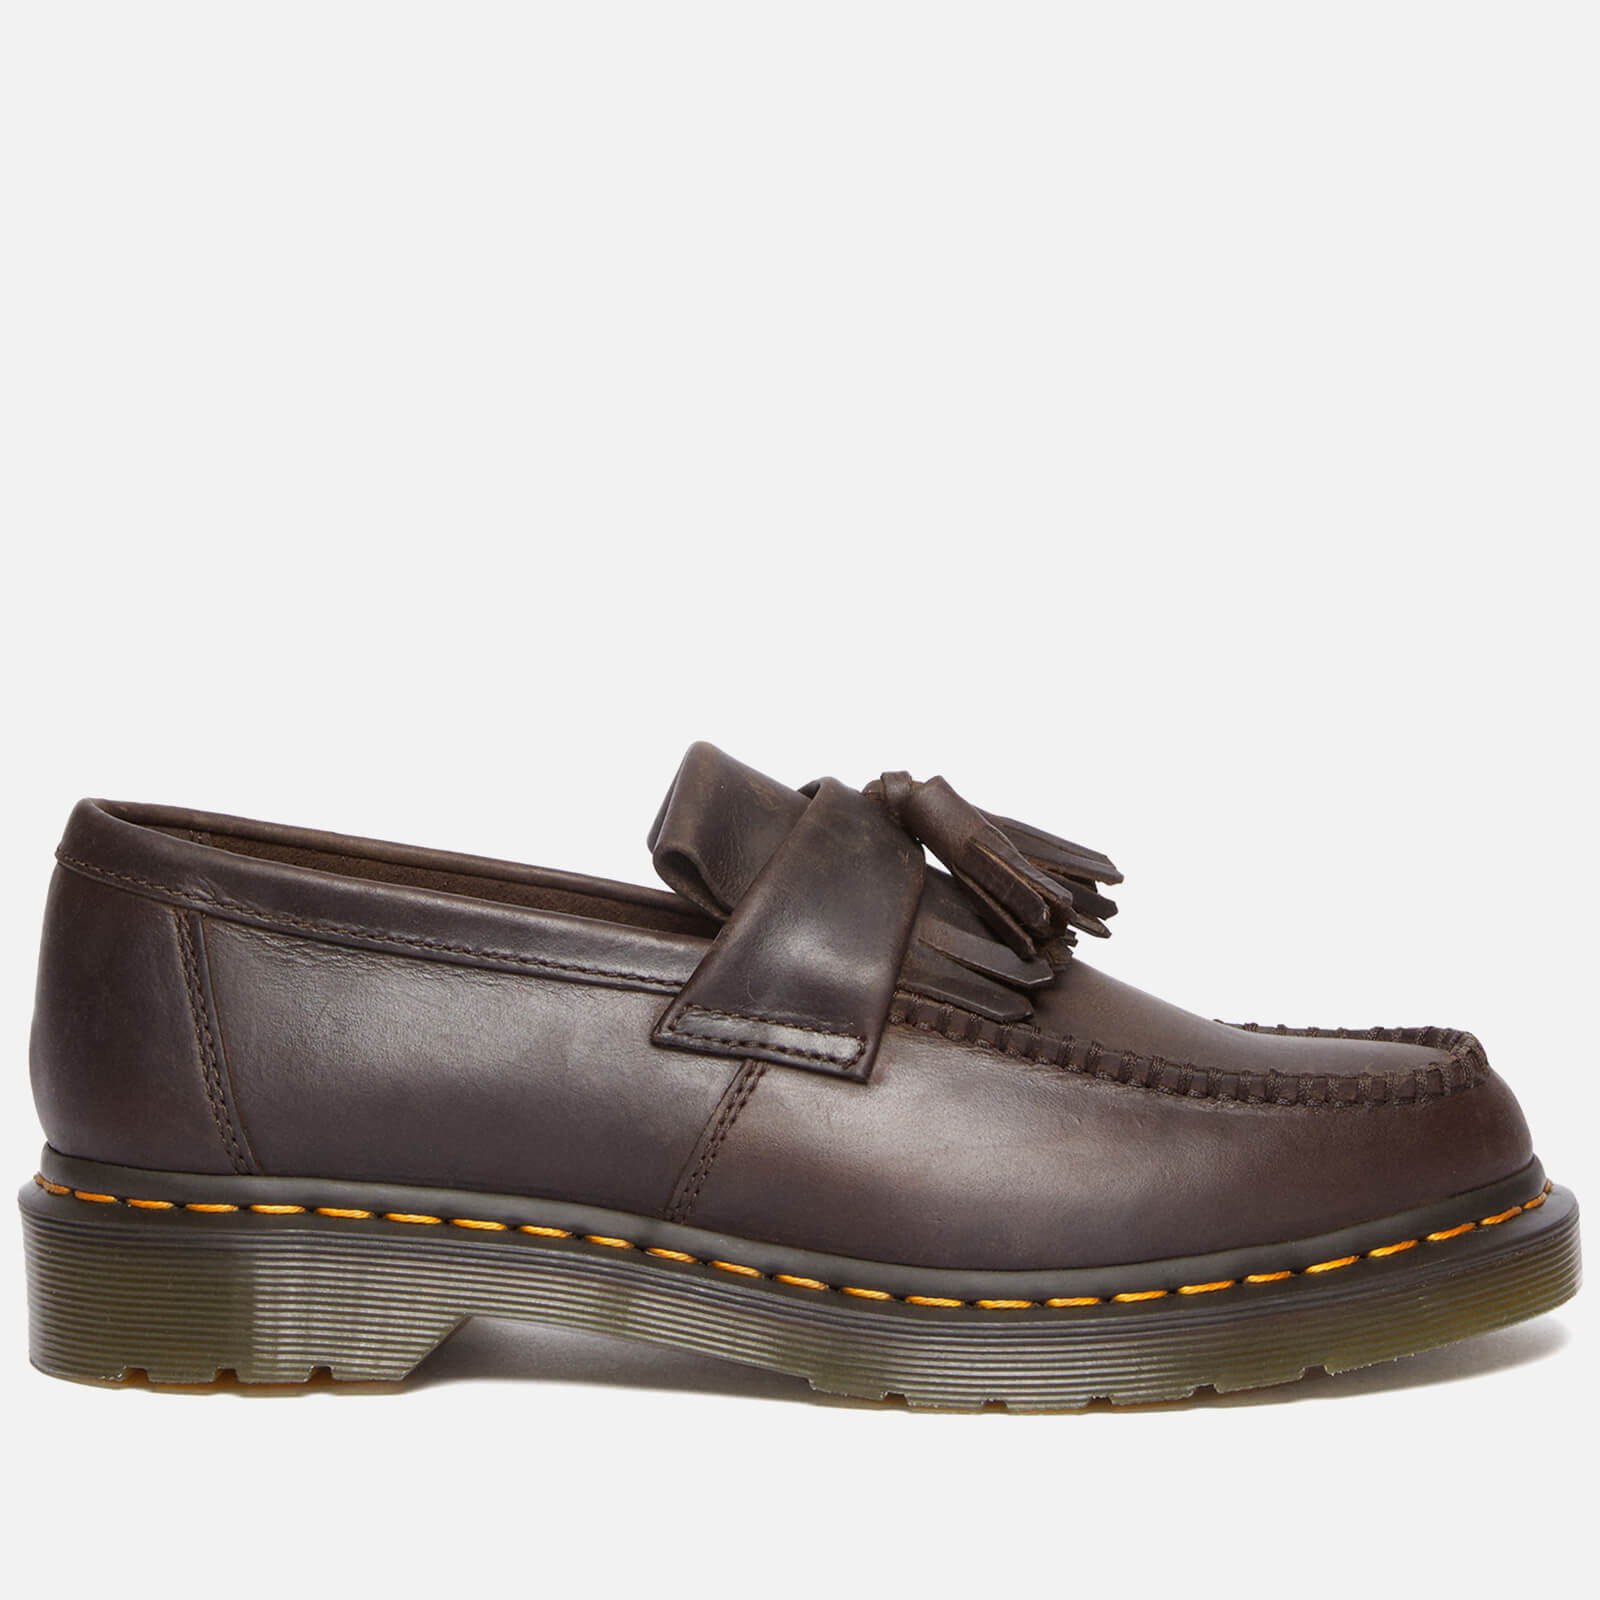 Dr. Martens Men's Adrian Leather Loafers - Dark Brown - UK 7